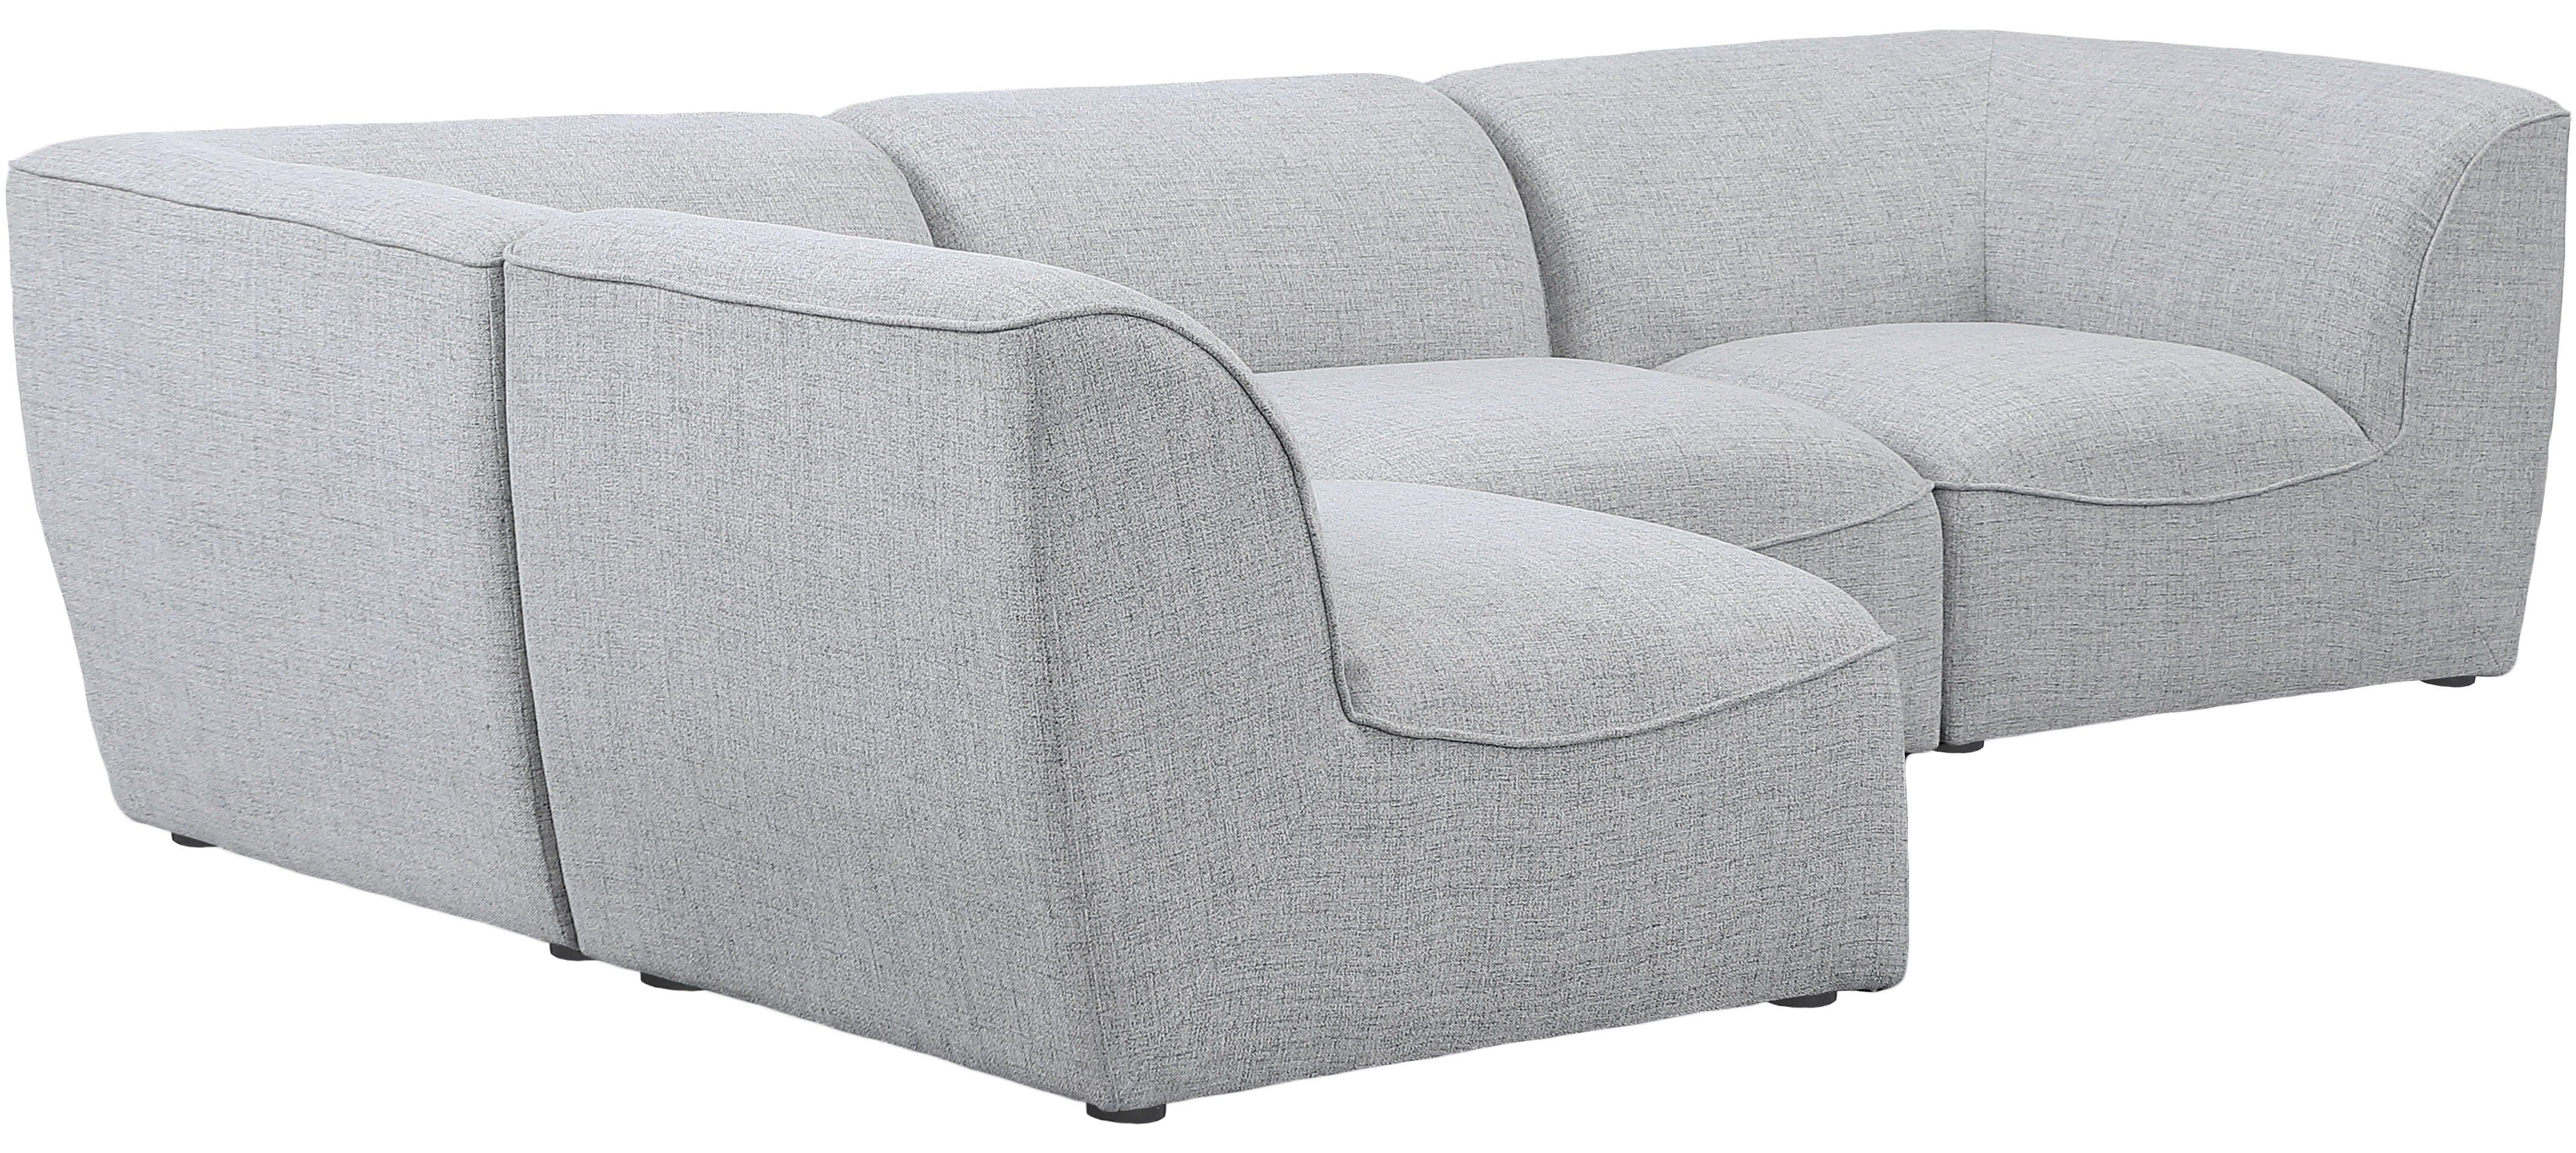 Meridian Furniture - Miramar - Modular Sectional 4 Piece - Gray - 5th Avenue Furniture